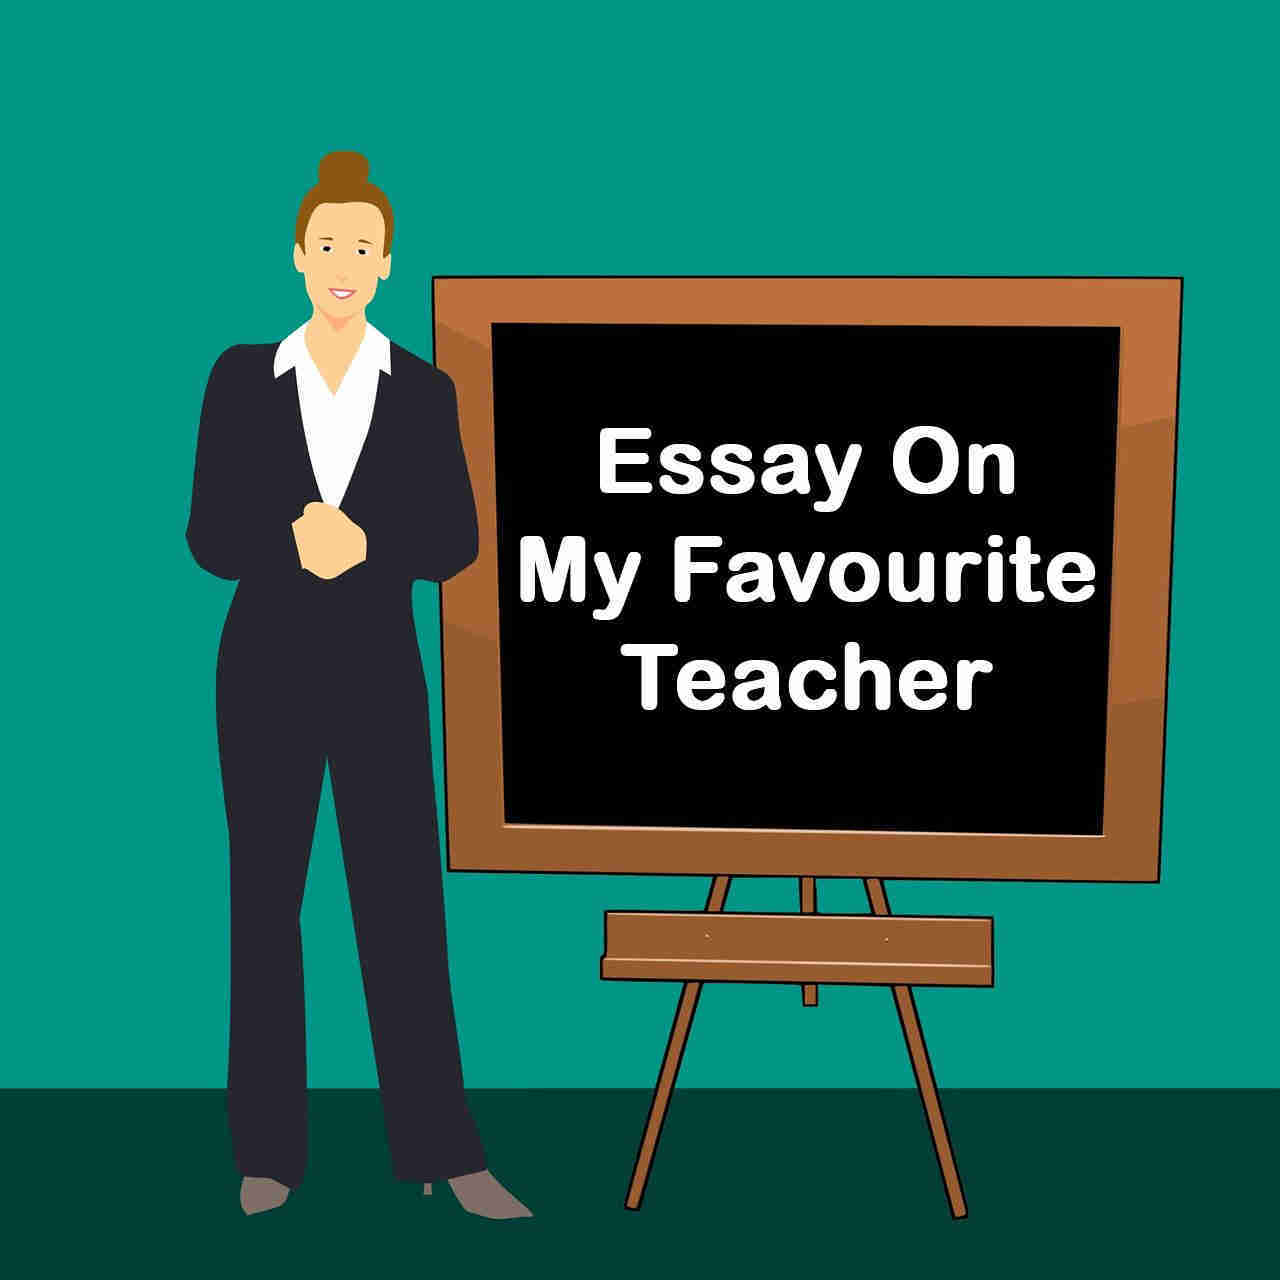 500 words essay on my favourite teacher